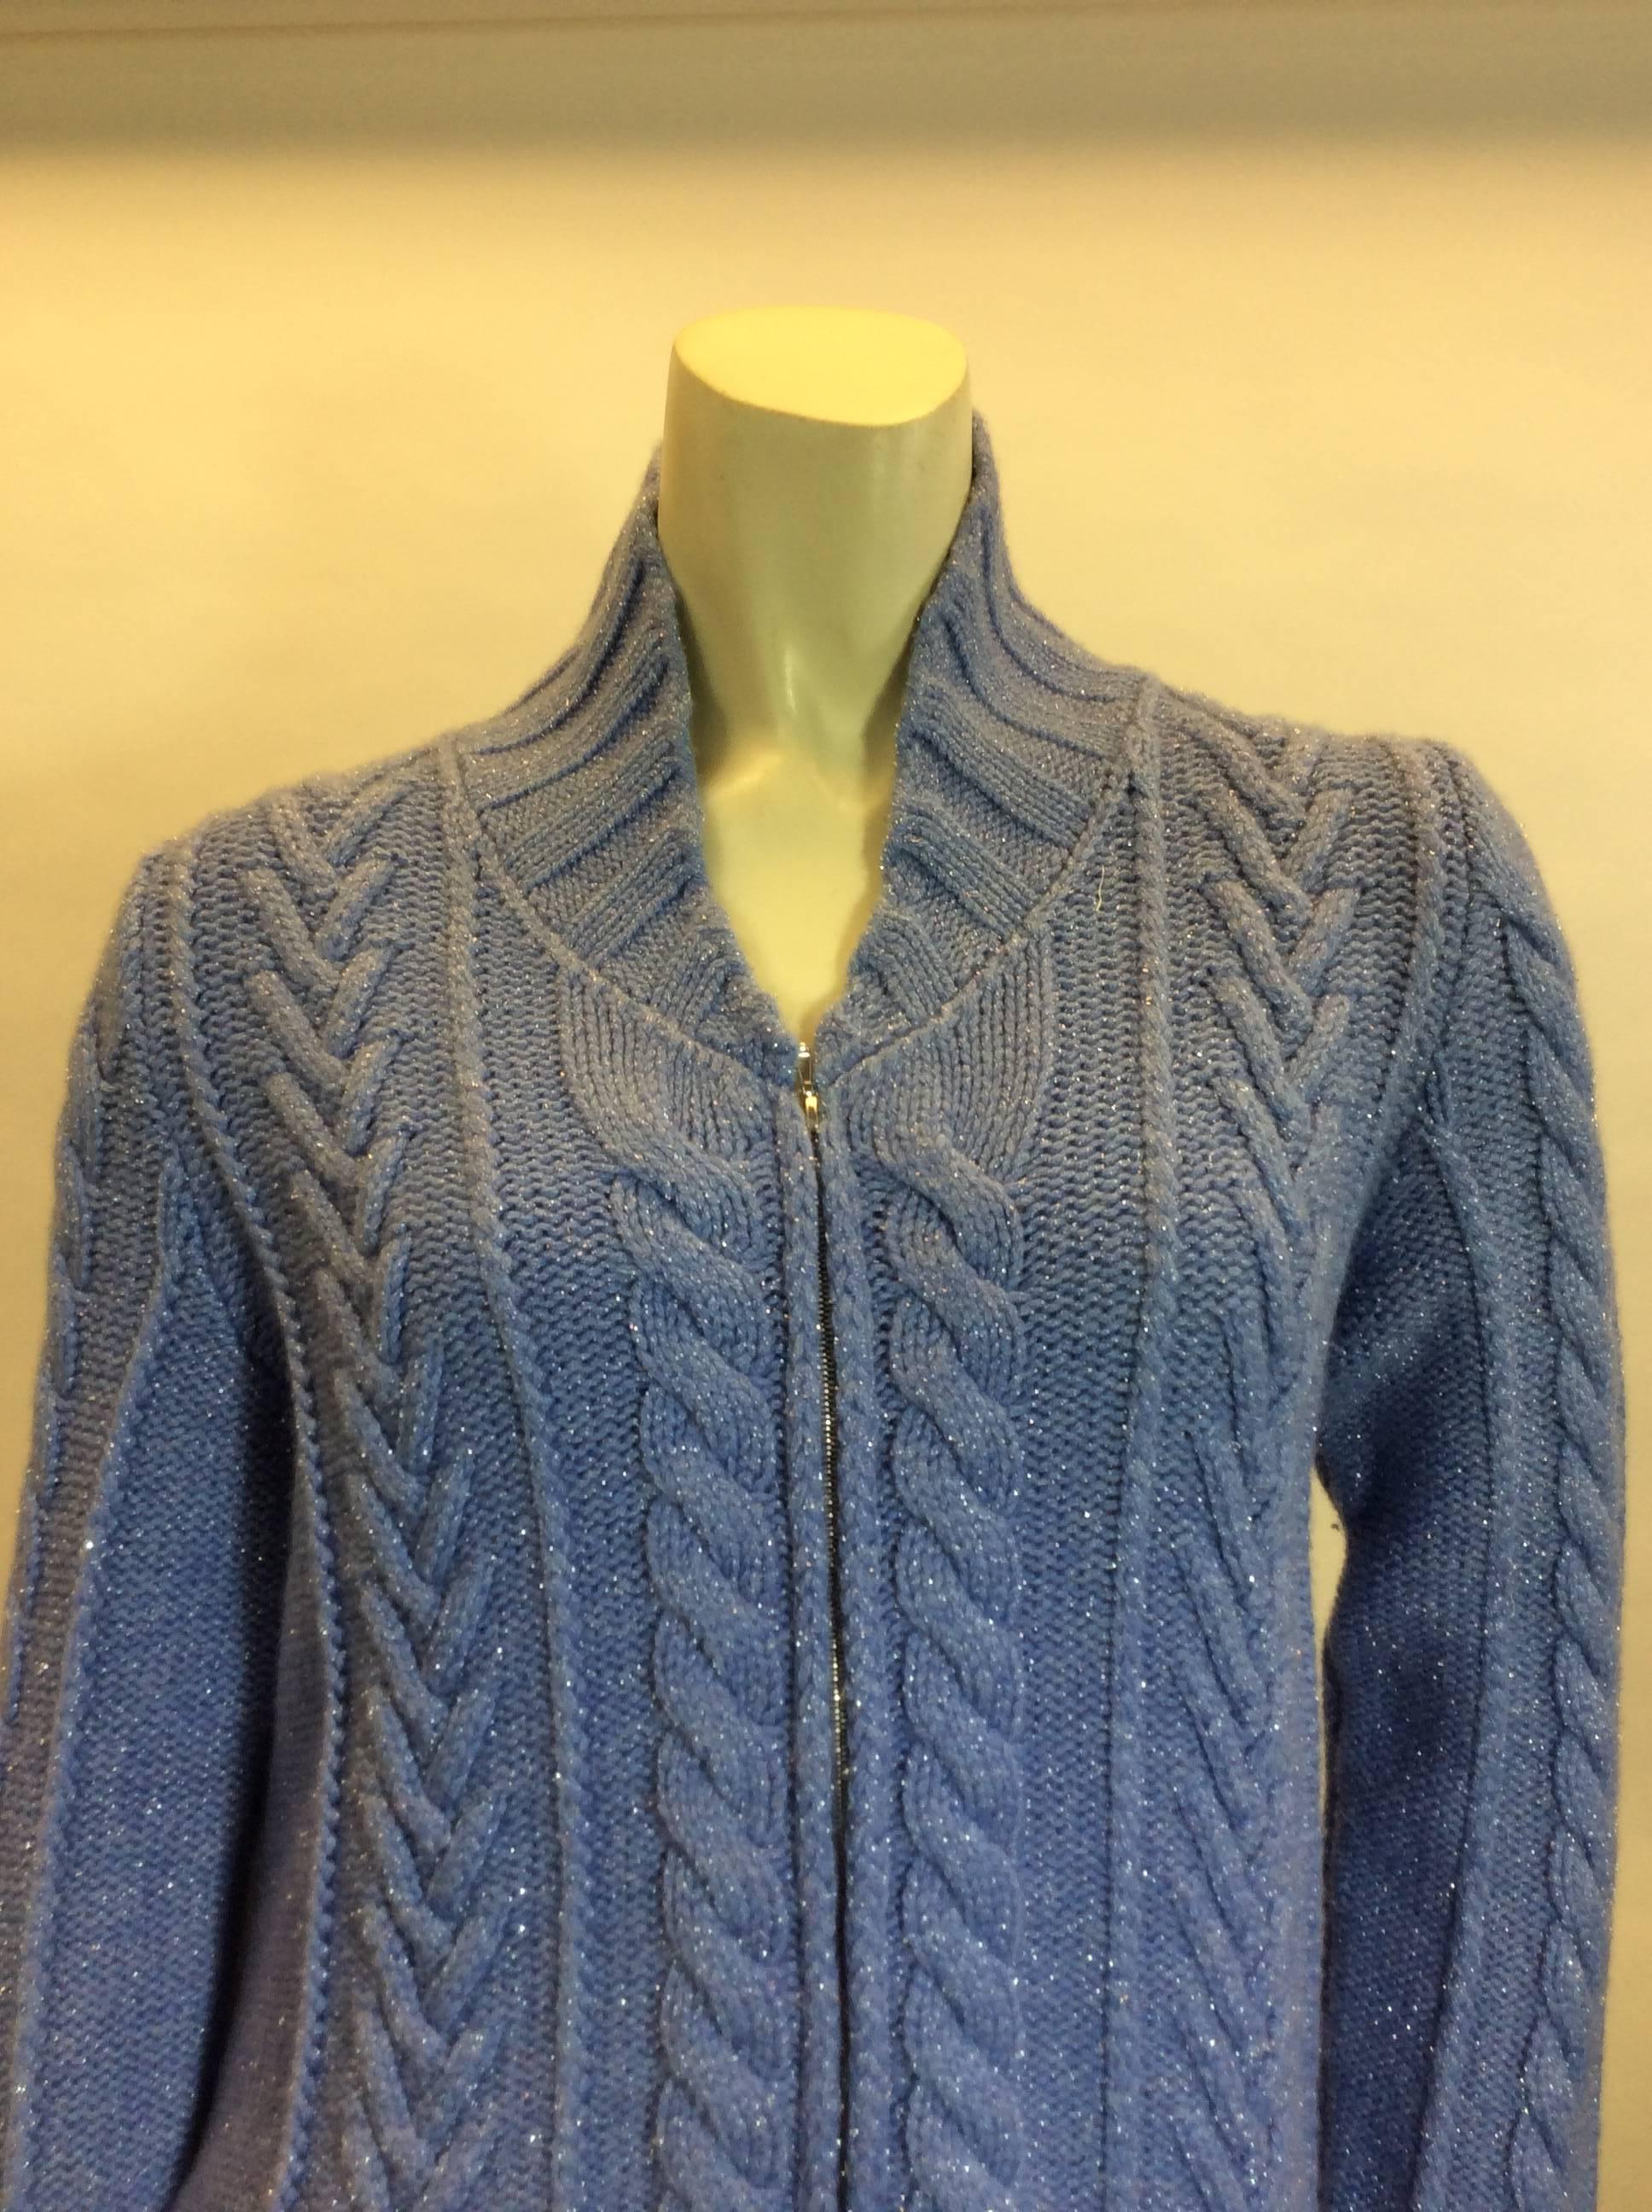 Leggiadro NWT Sweater
Original price: $1495
Periwinkle sweater with silver metallic
High collar
Size Medium
Made in NYC

